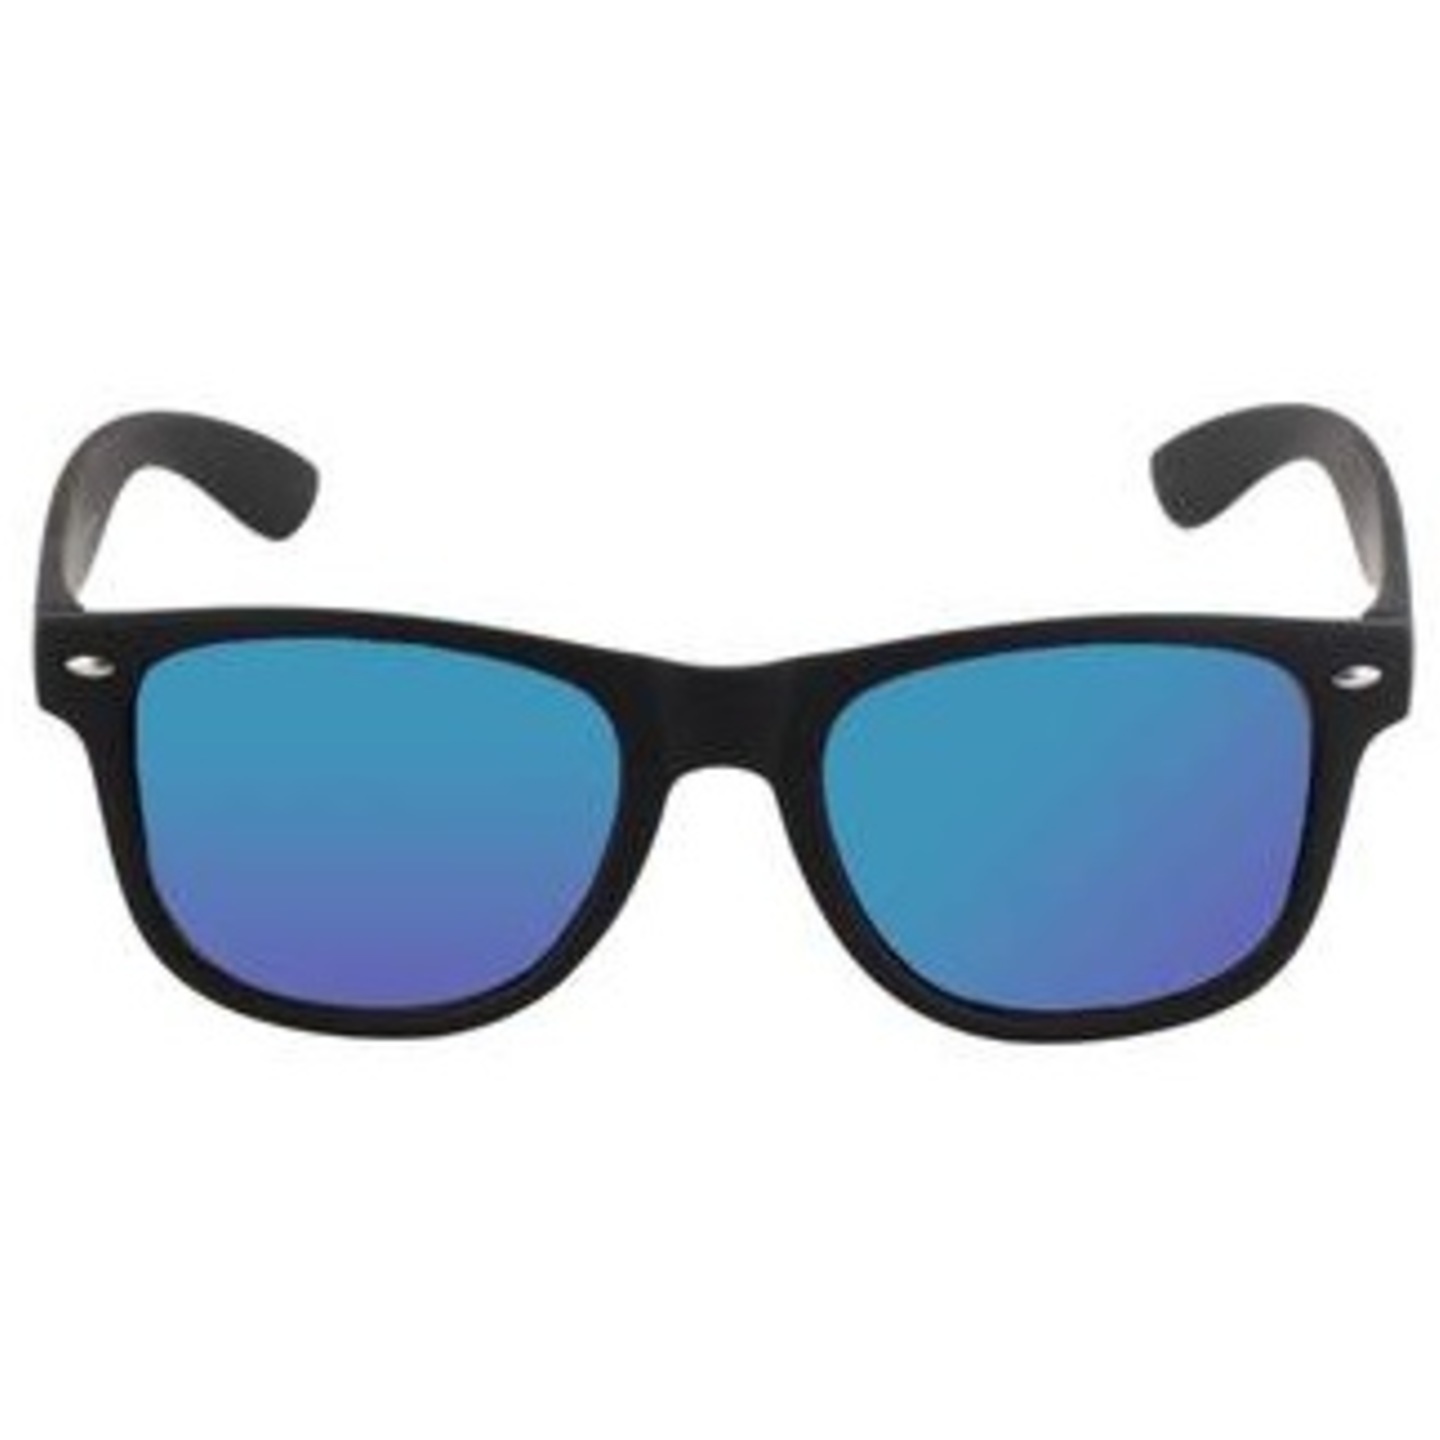 Full Frame Sunglasses with hard box